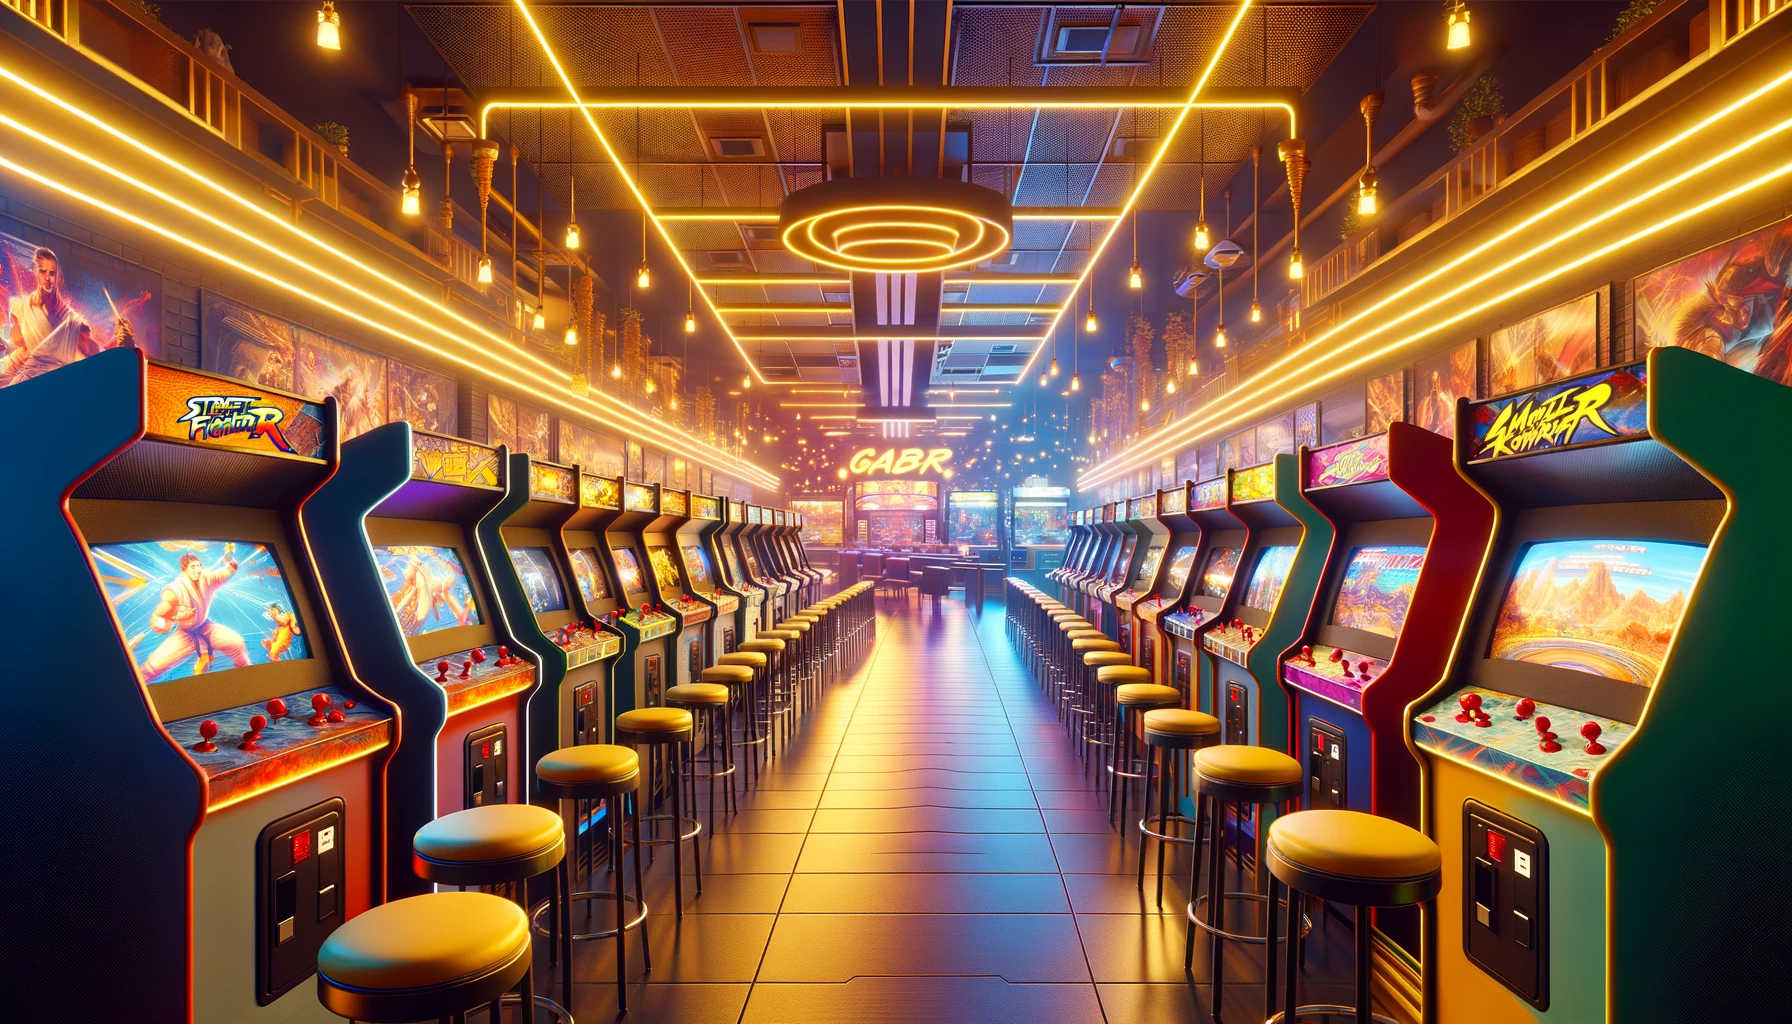 How did arcades make money?